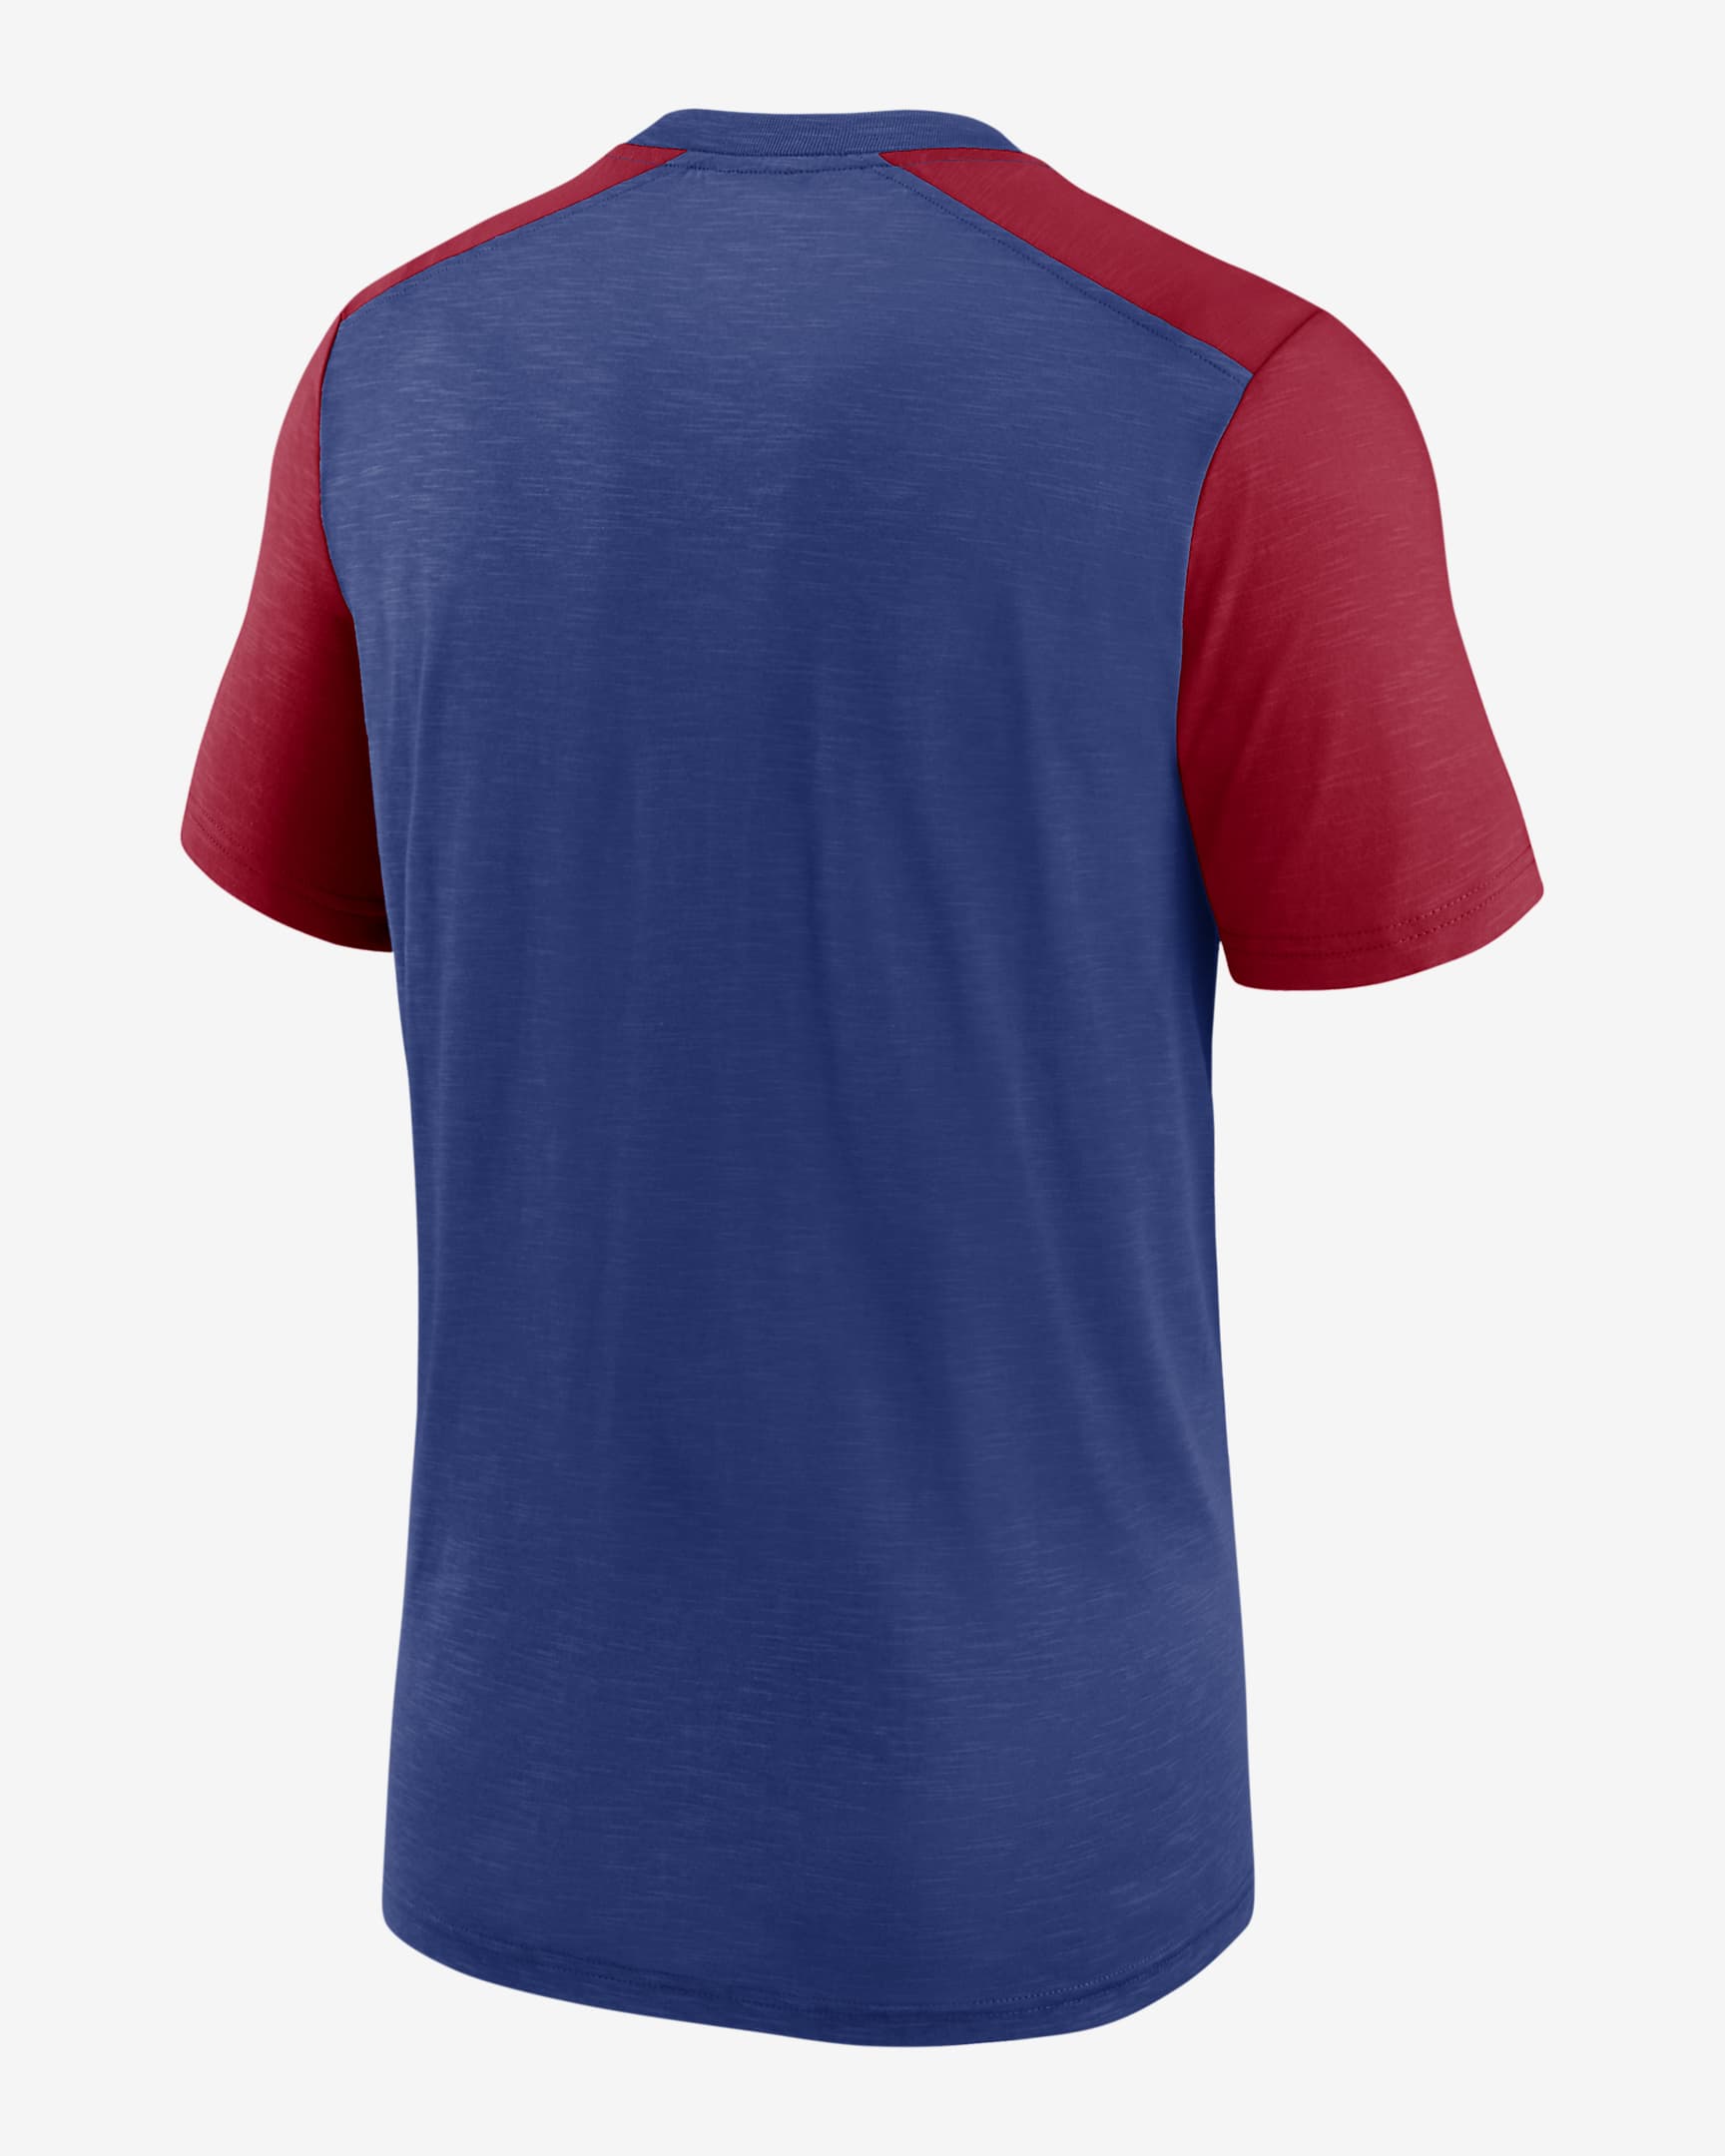 Nike Color Block Team Name (NFL New York Giants) Men's T-Shirt. Nike.com